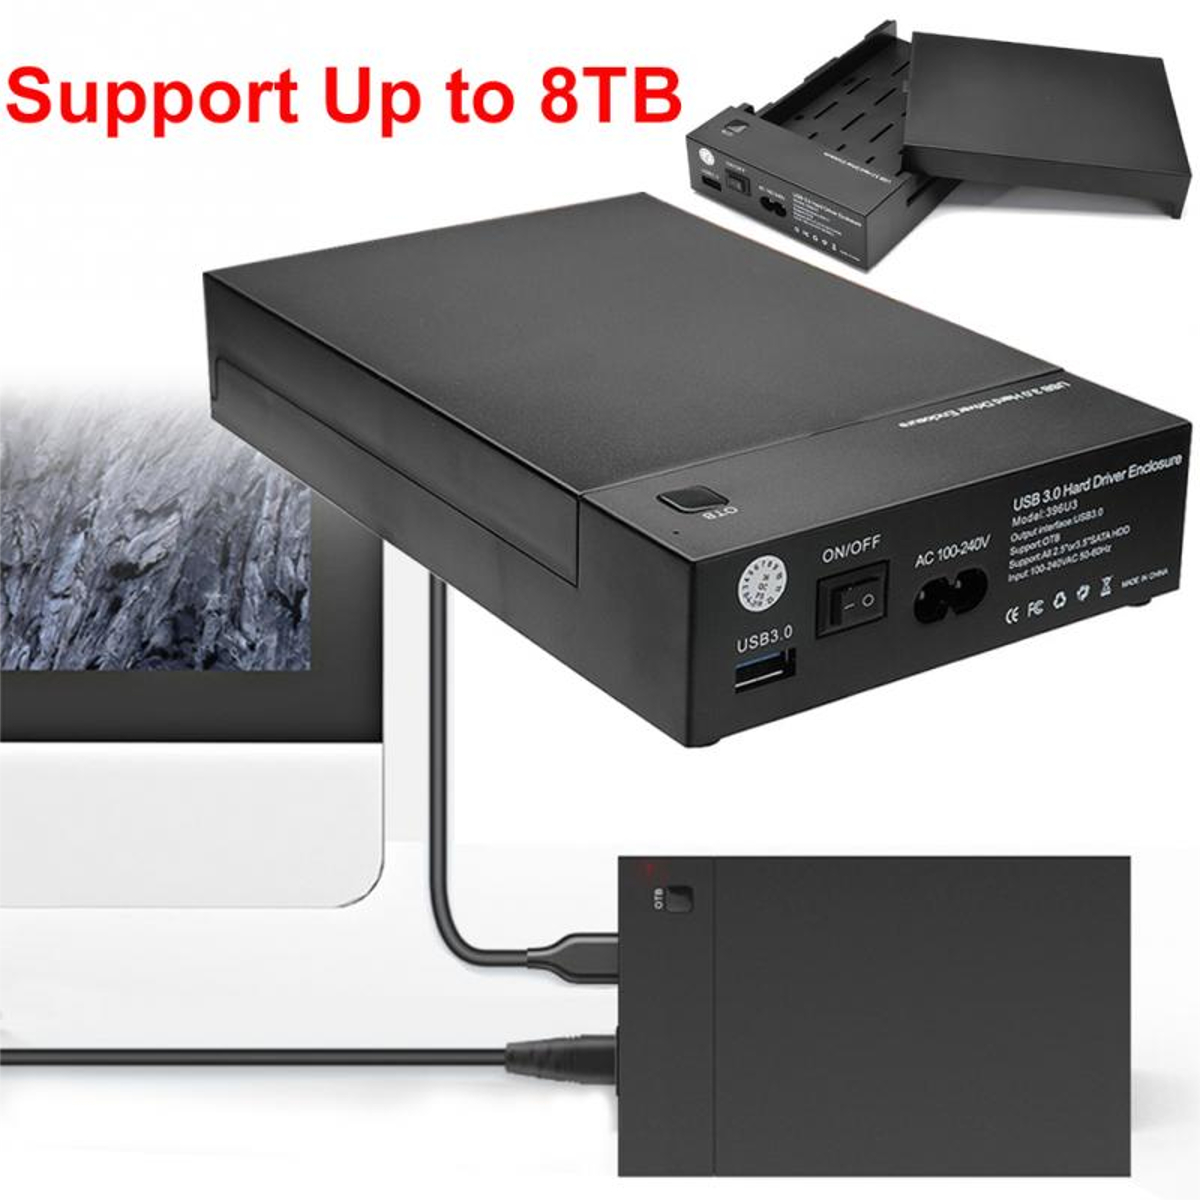 USB3.0 To SATA Serial Hard Disk External Box Enclosure Case For 2.5/3.5 inch HDD SSD Hard Drive 28